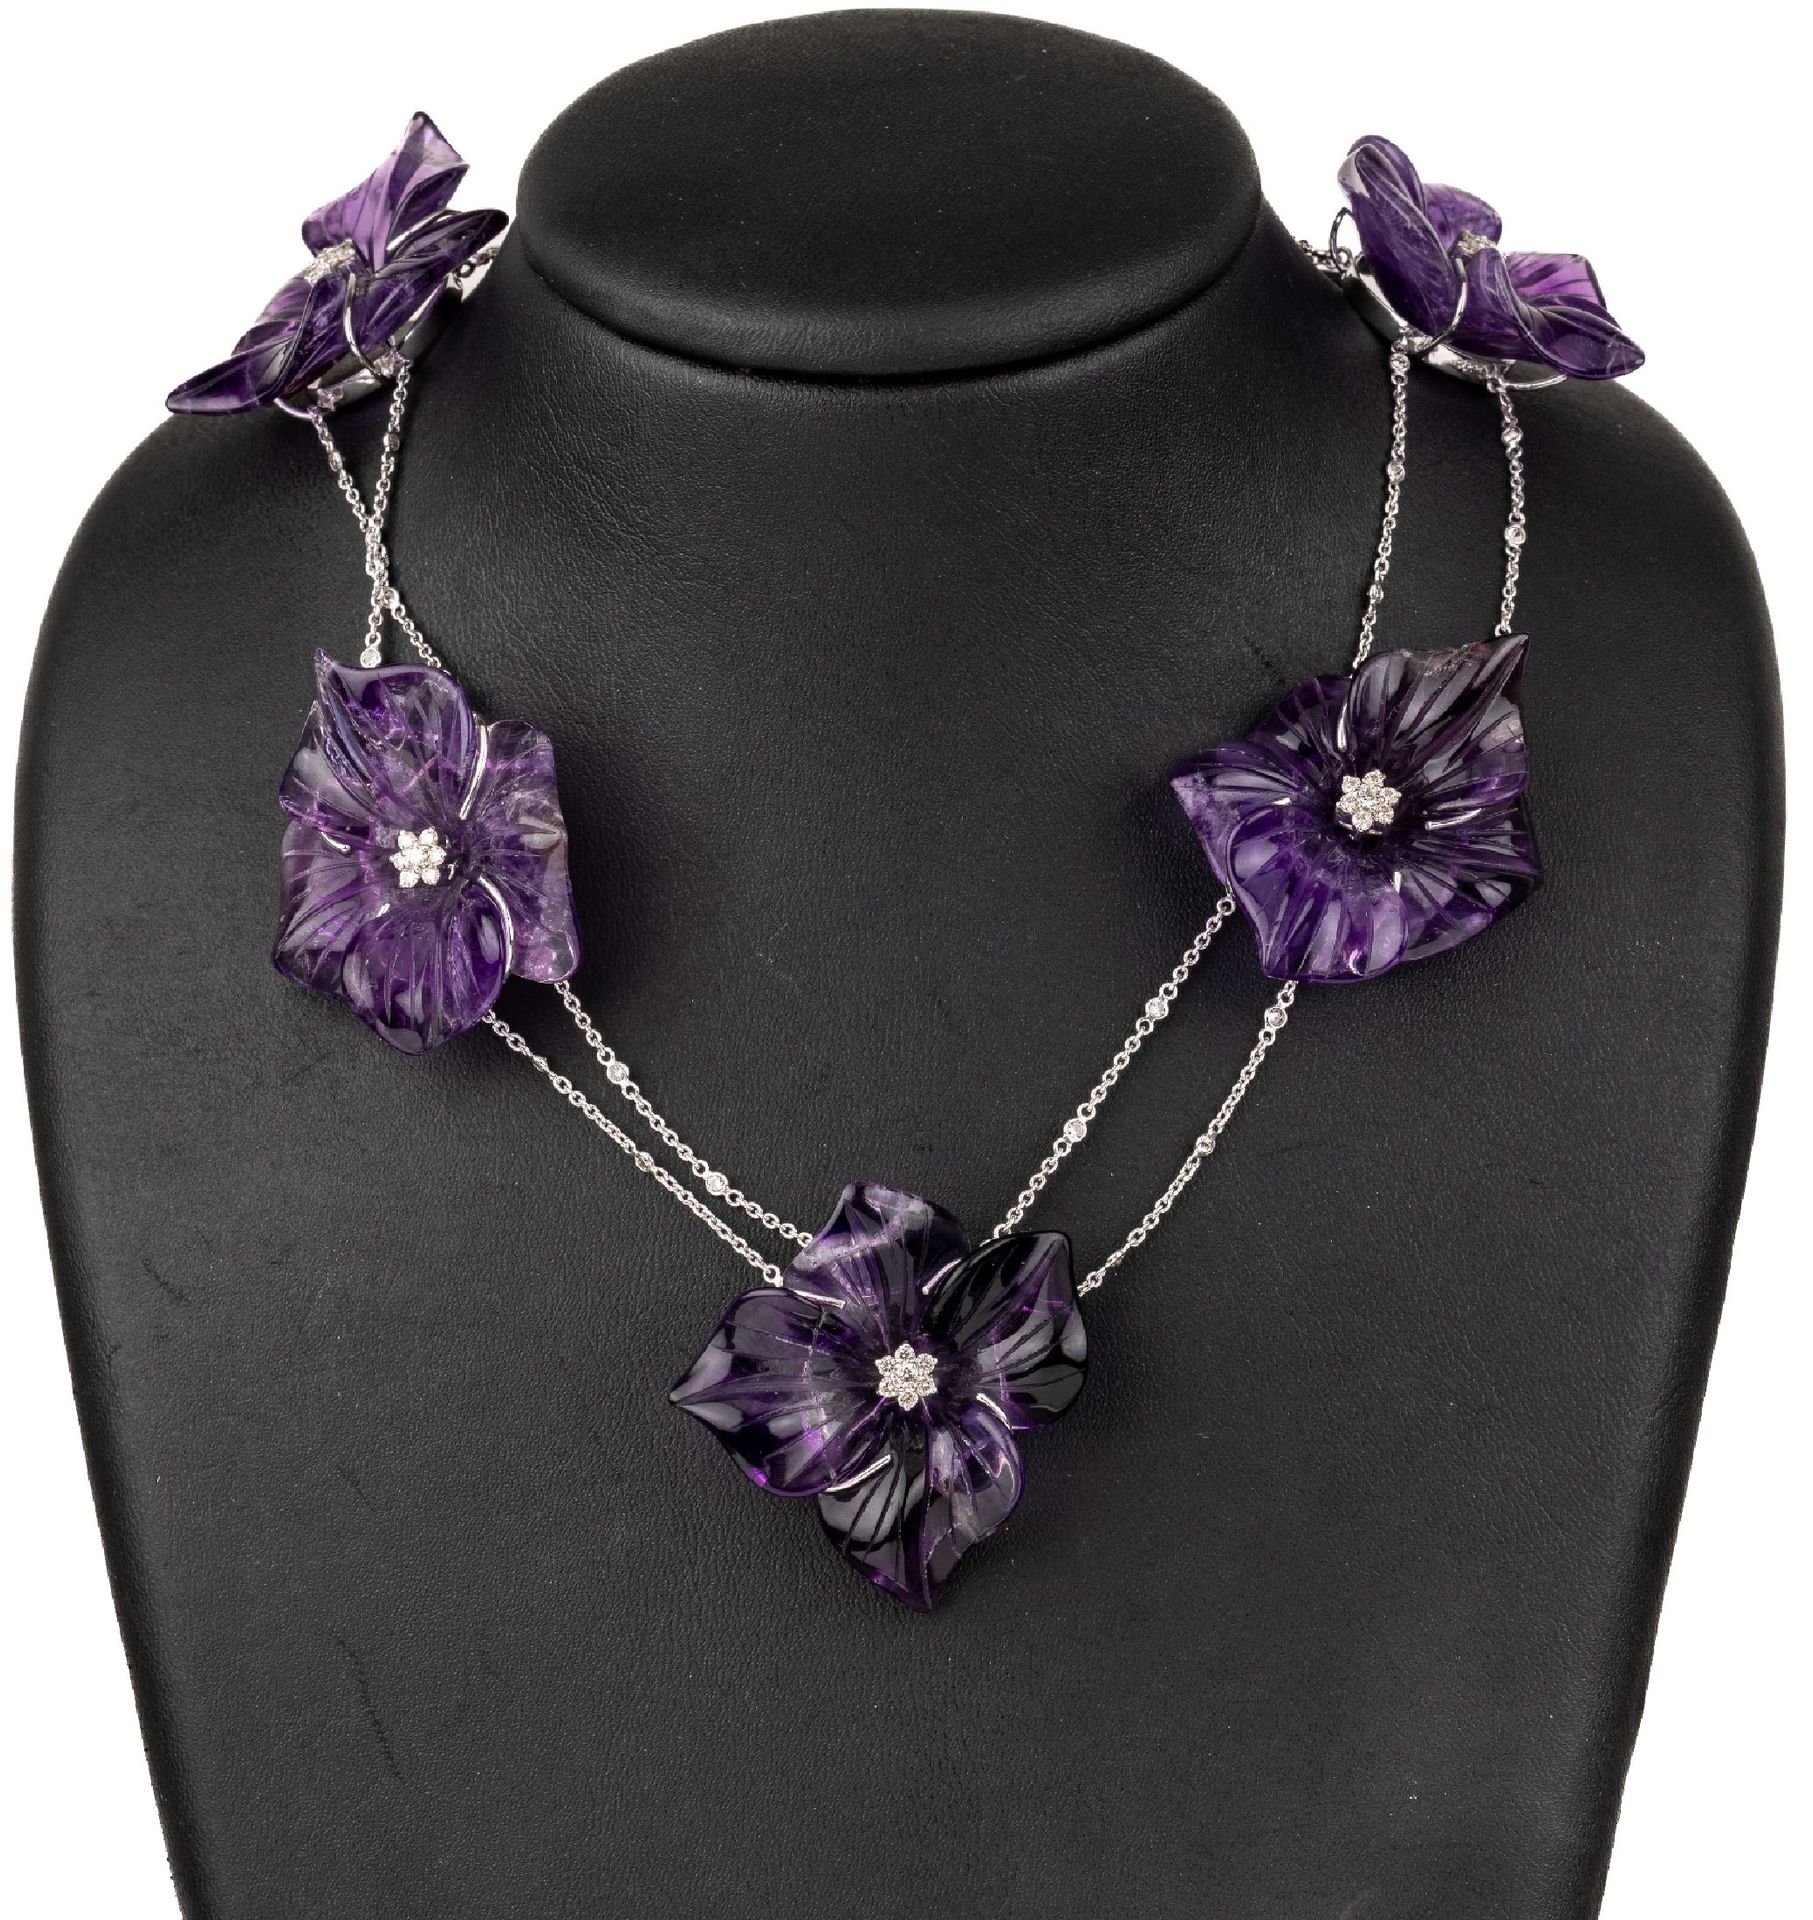 Null 一条独一无二的18K金钻石紫晶项链，WG 750/000，6朵紫晶花经过切割、抛光、打磨和雕刻，（其中1朵花朵已损坏），花朵上印有42颗明亮式切割钻石&hellip;